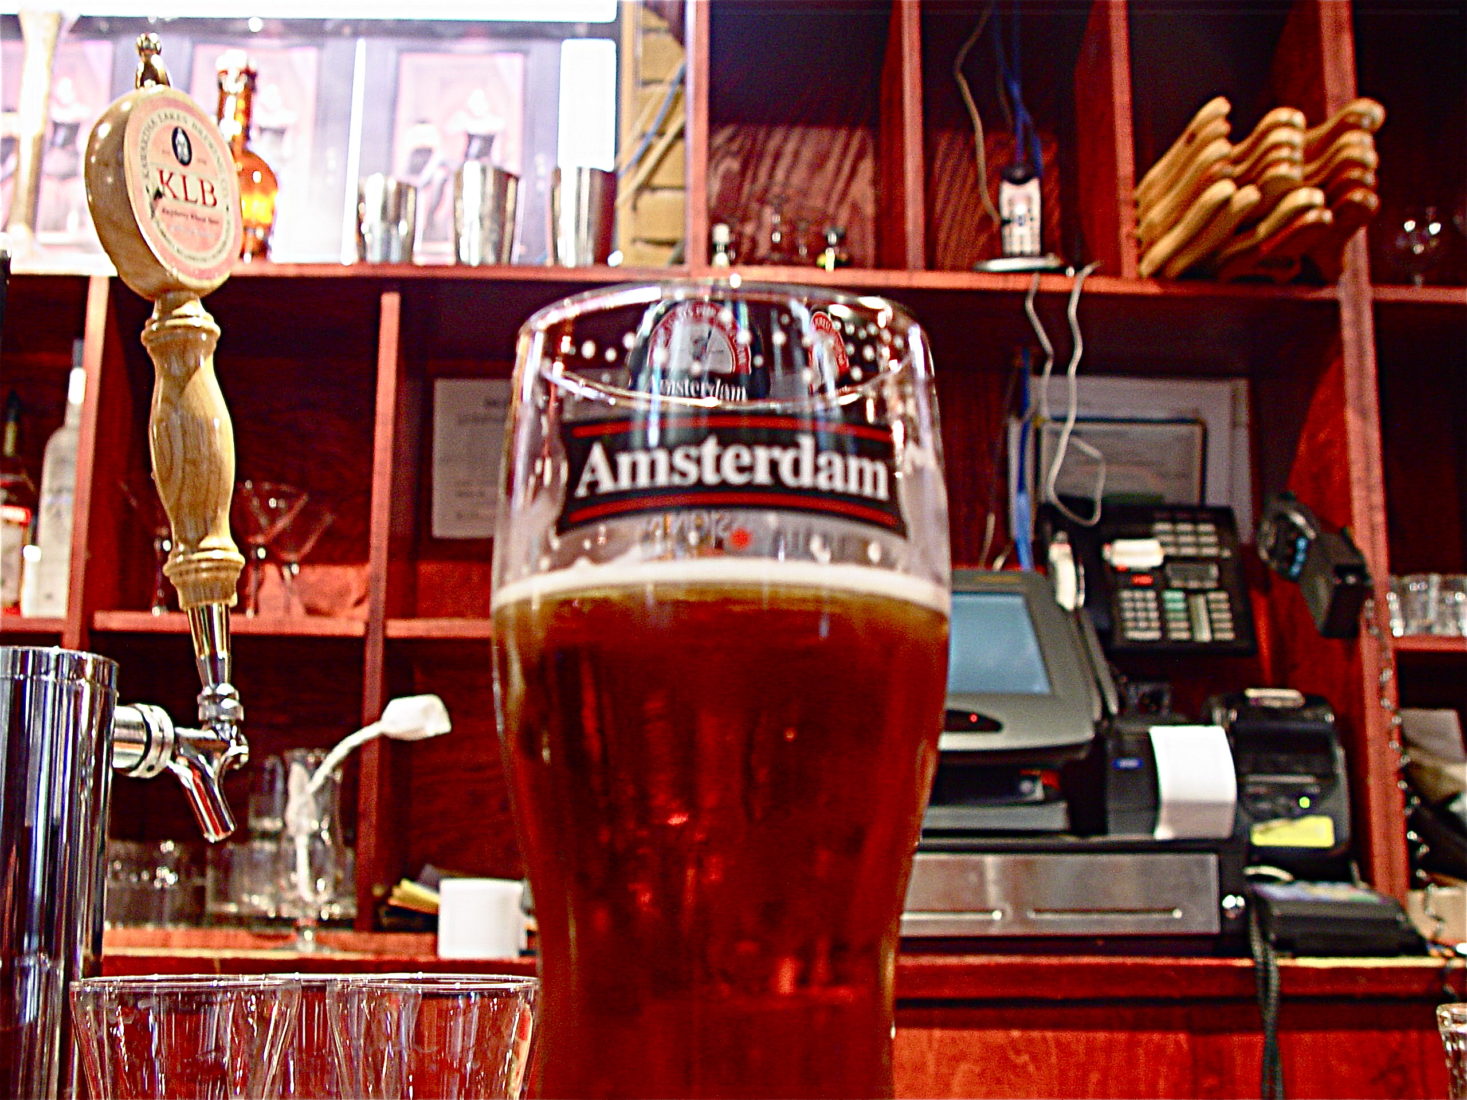 57. Amsterdam Brewing Co, Toronto, Canada 2005